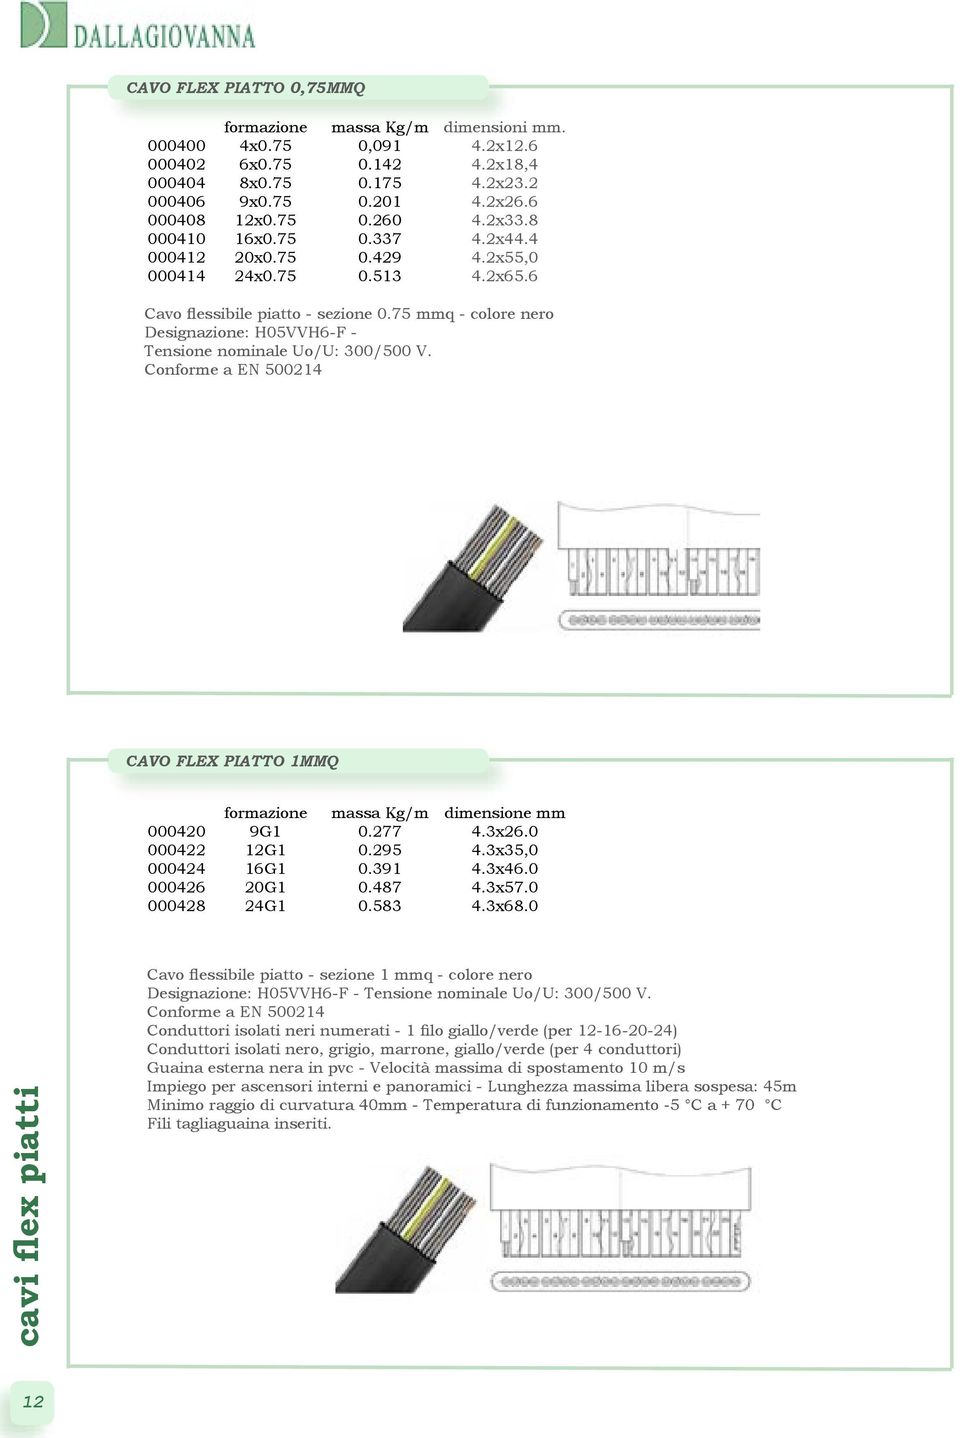 75 mmq - colore nero Designazione: H05VVH6-F - Tensione nominale Uo/U: 300/500 V.